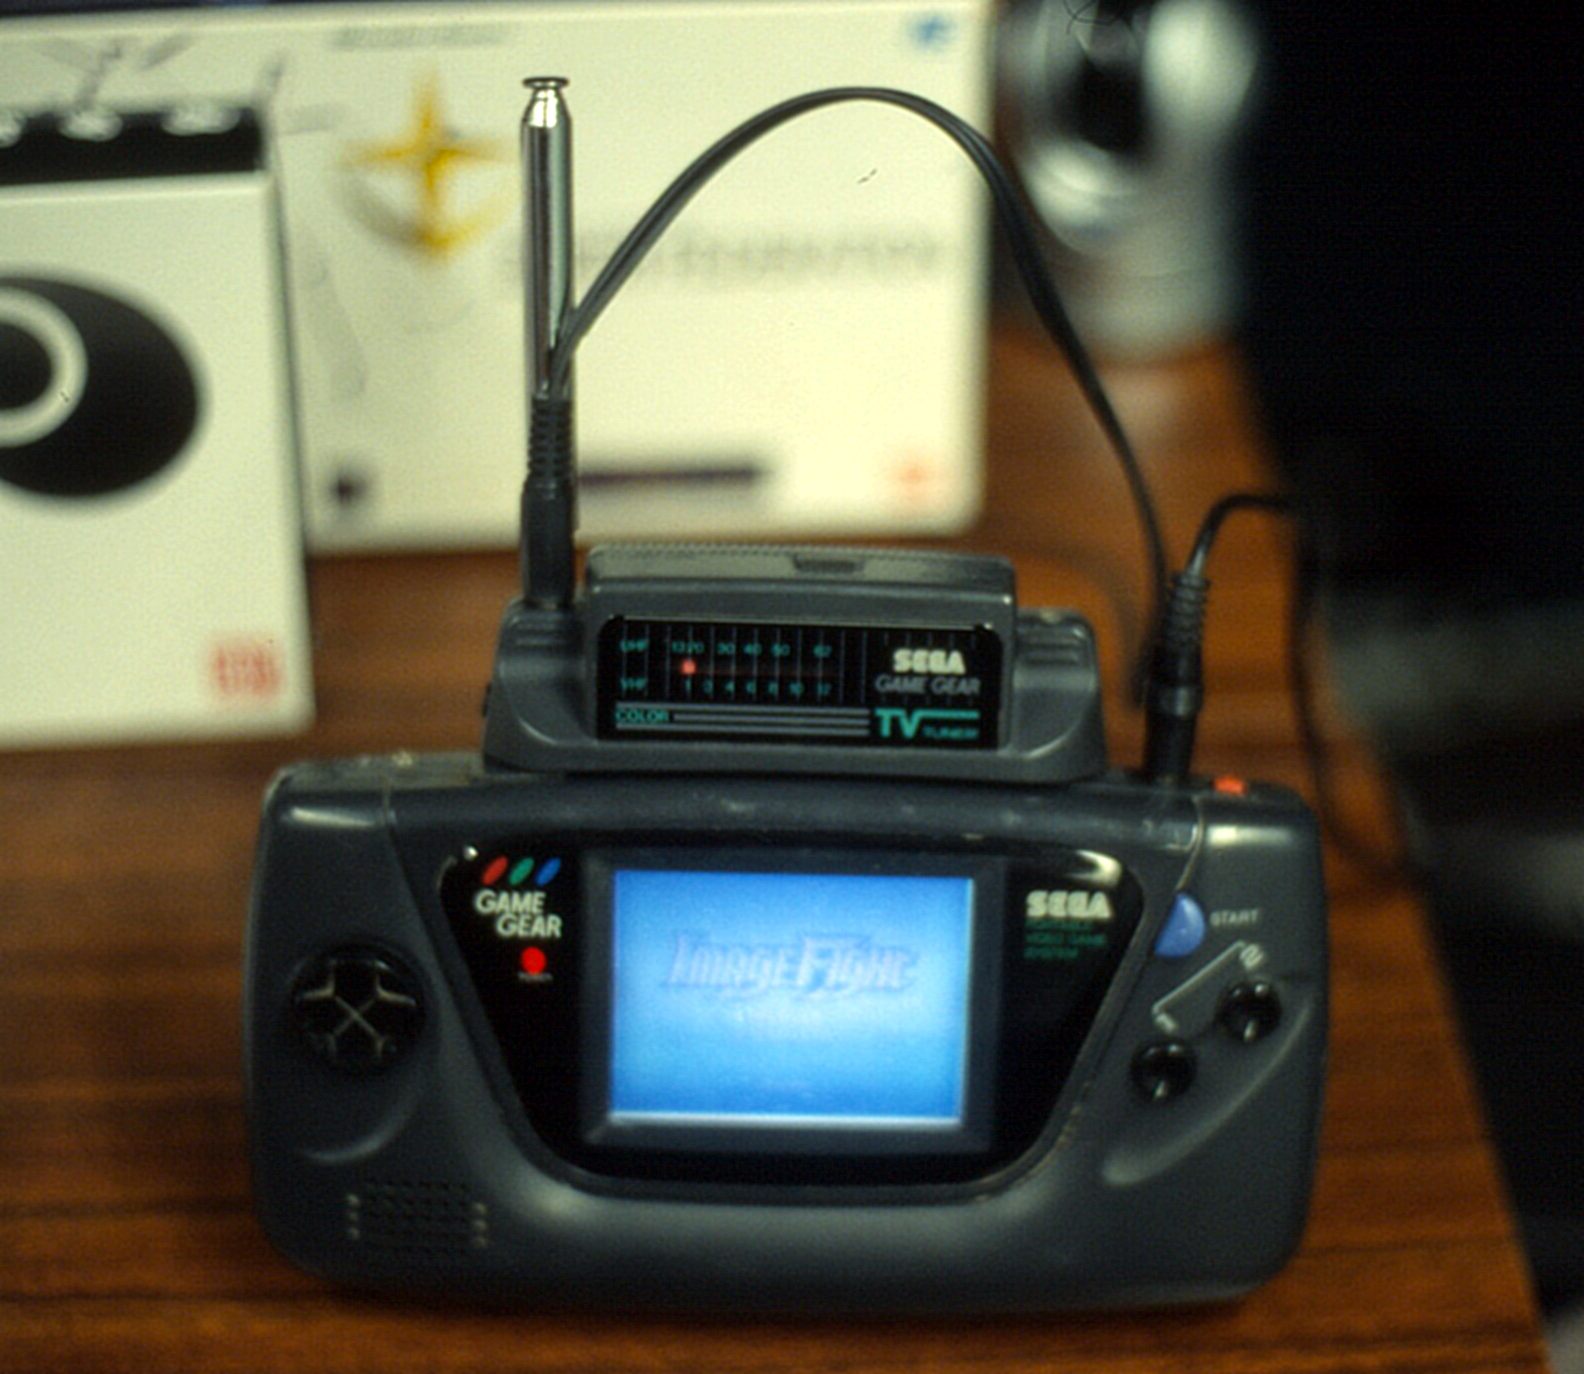 Ultimate game gear. Sega game Gear. Sega game Gear Micro. Sega game Gear TV Tuner. Sega game Gear Analog TV Tuner.